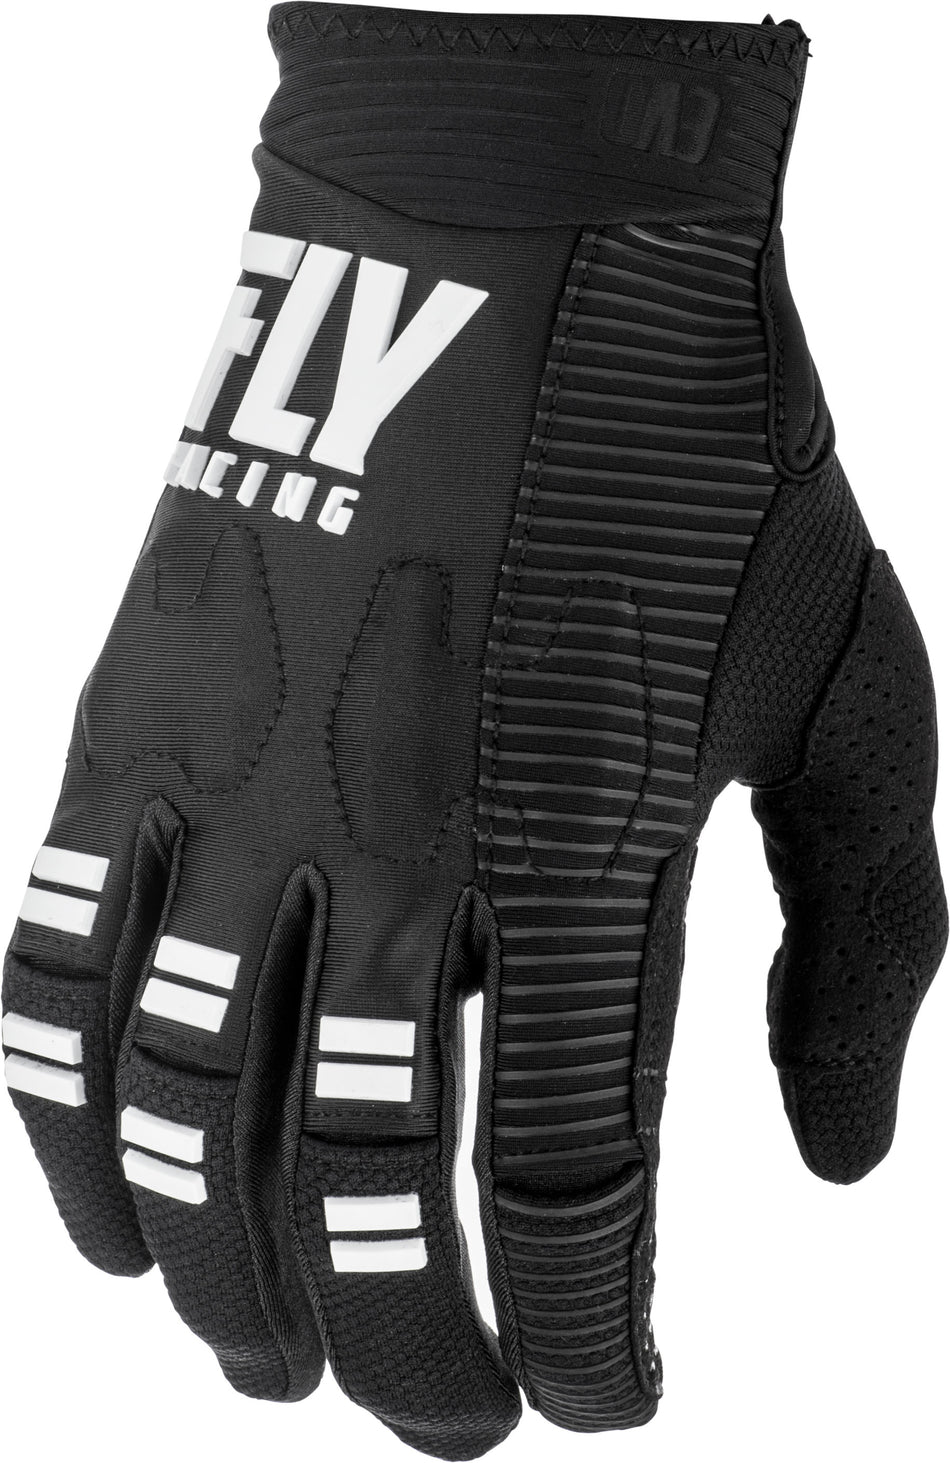 FLY RACING Evolution Dst Gloves Black/White Sz 12 372-11012